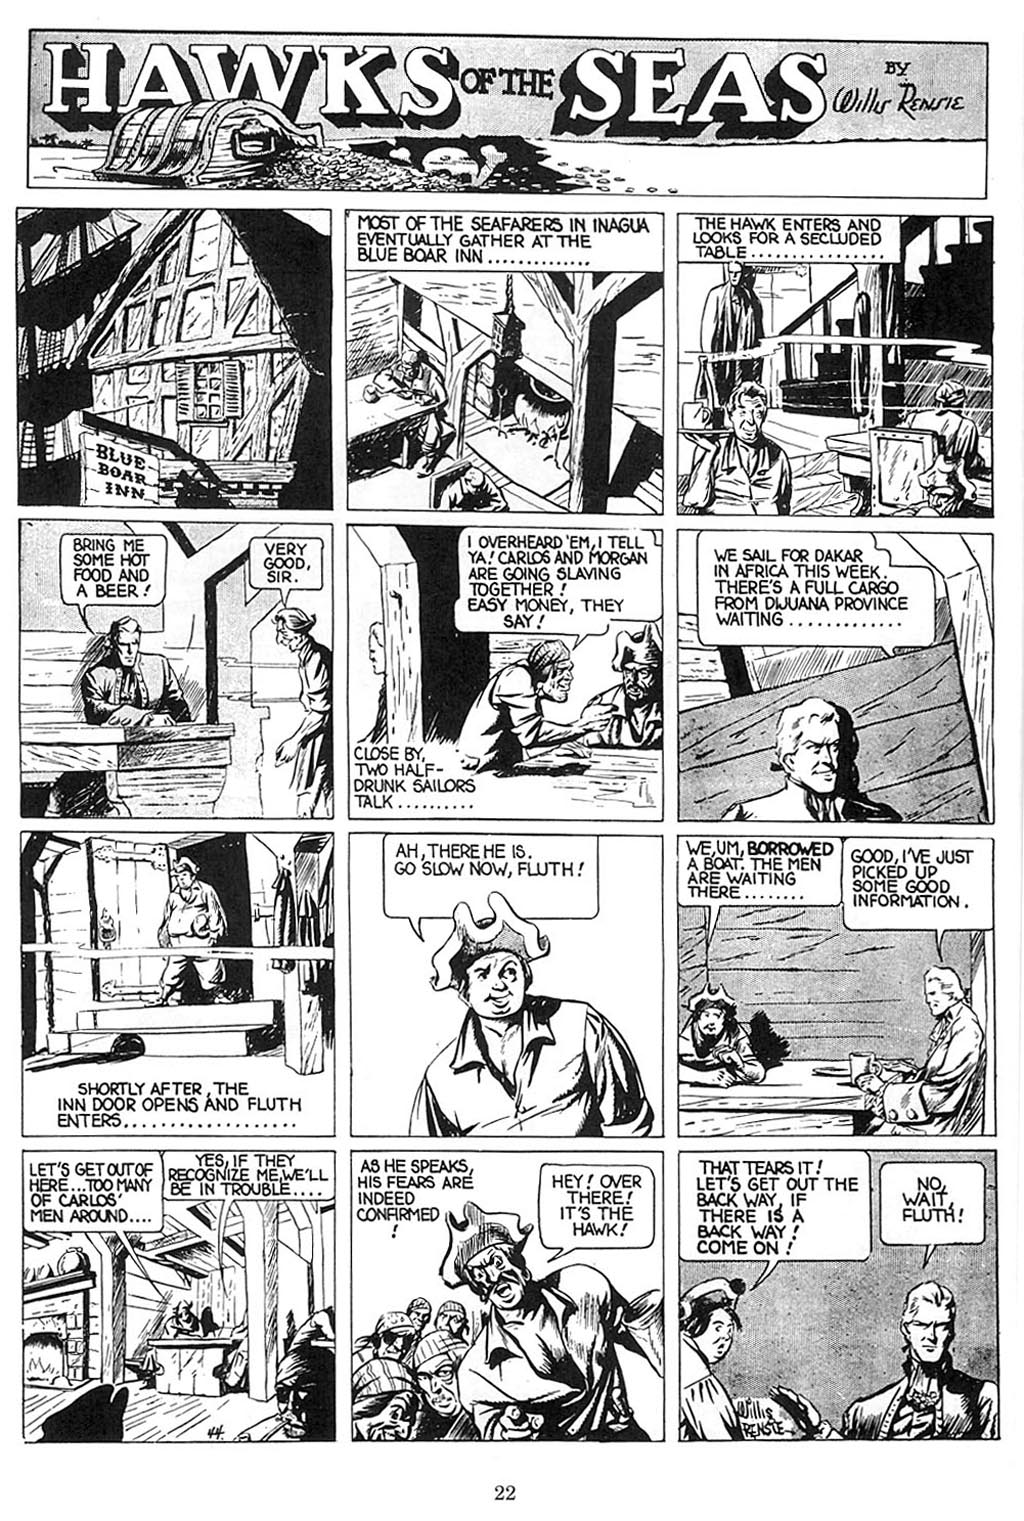 Read online Will Eisner's Hawks of the Seas comic -  Issue # TPB - 23